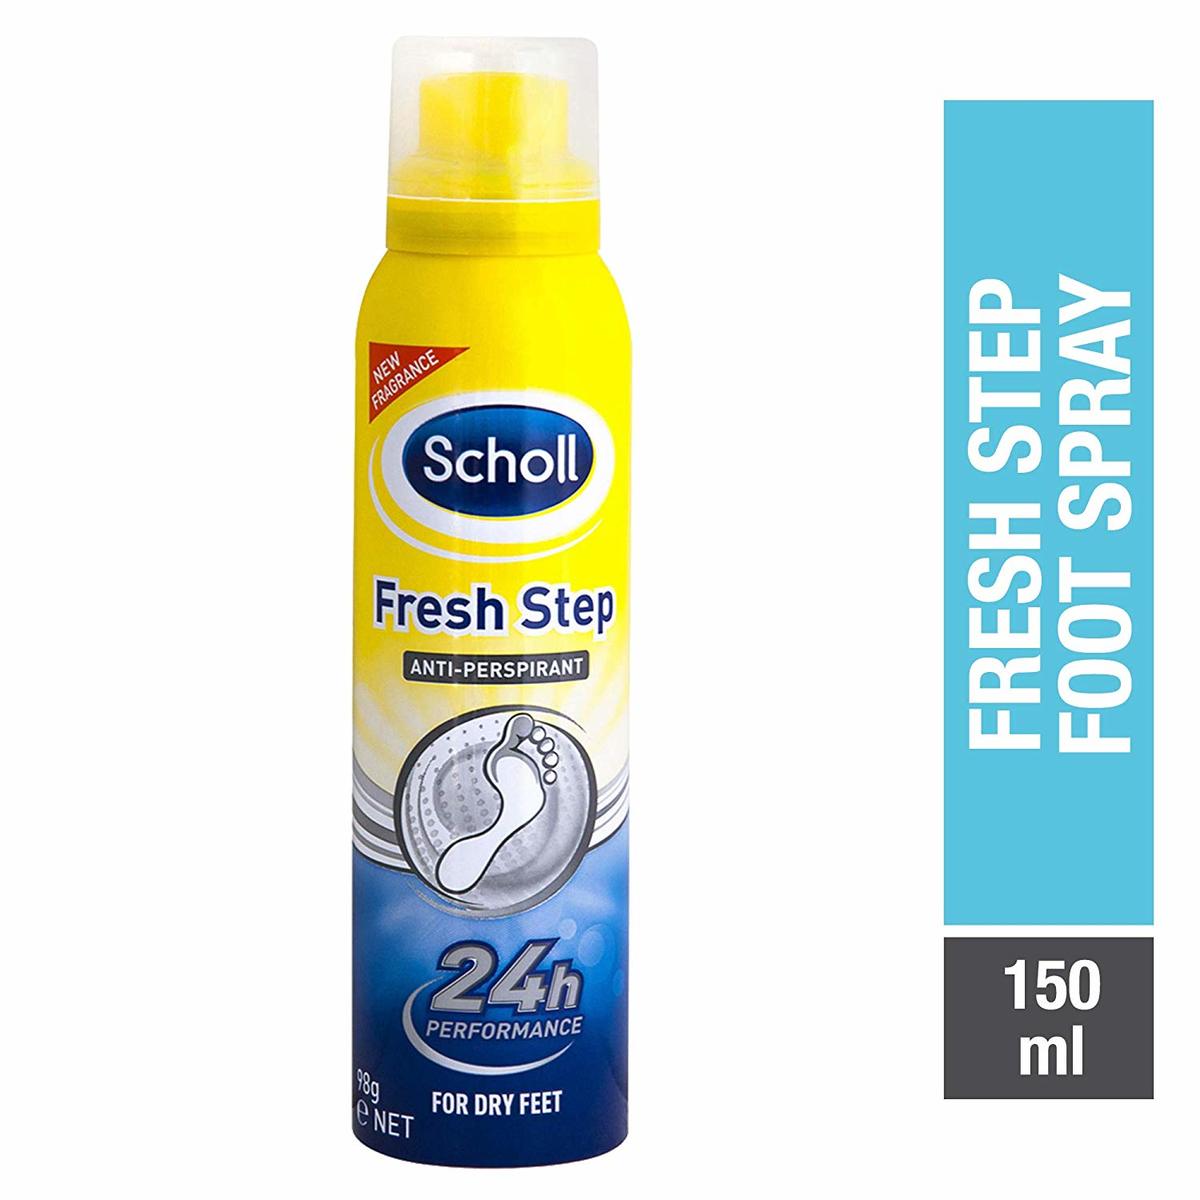 Scholl Foot Care Fresh Step Odour Control Foot Spray 150 ml